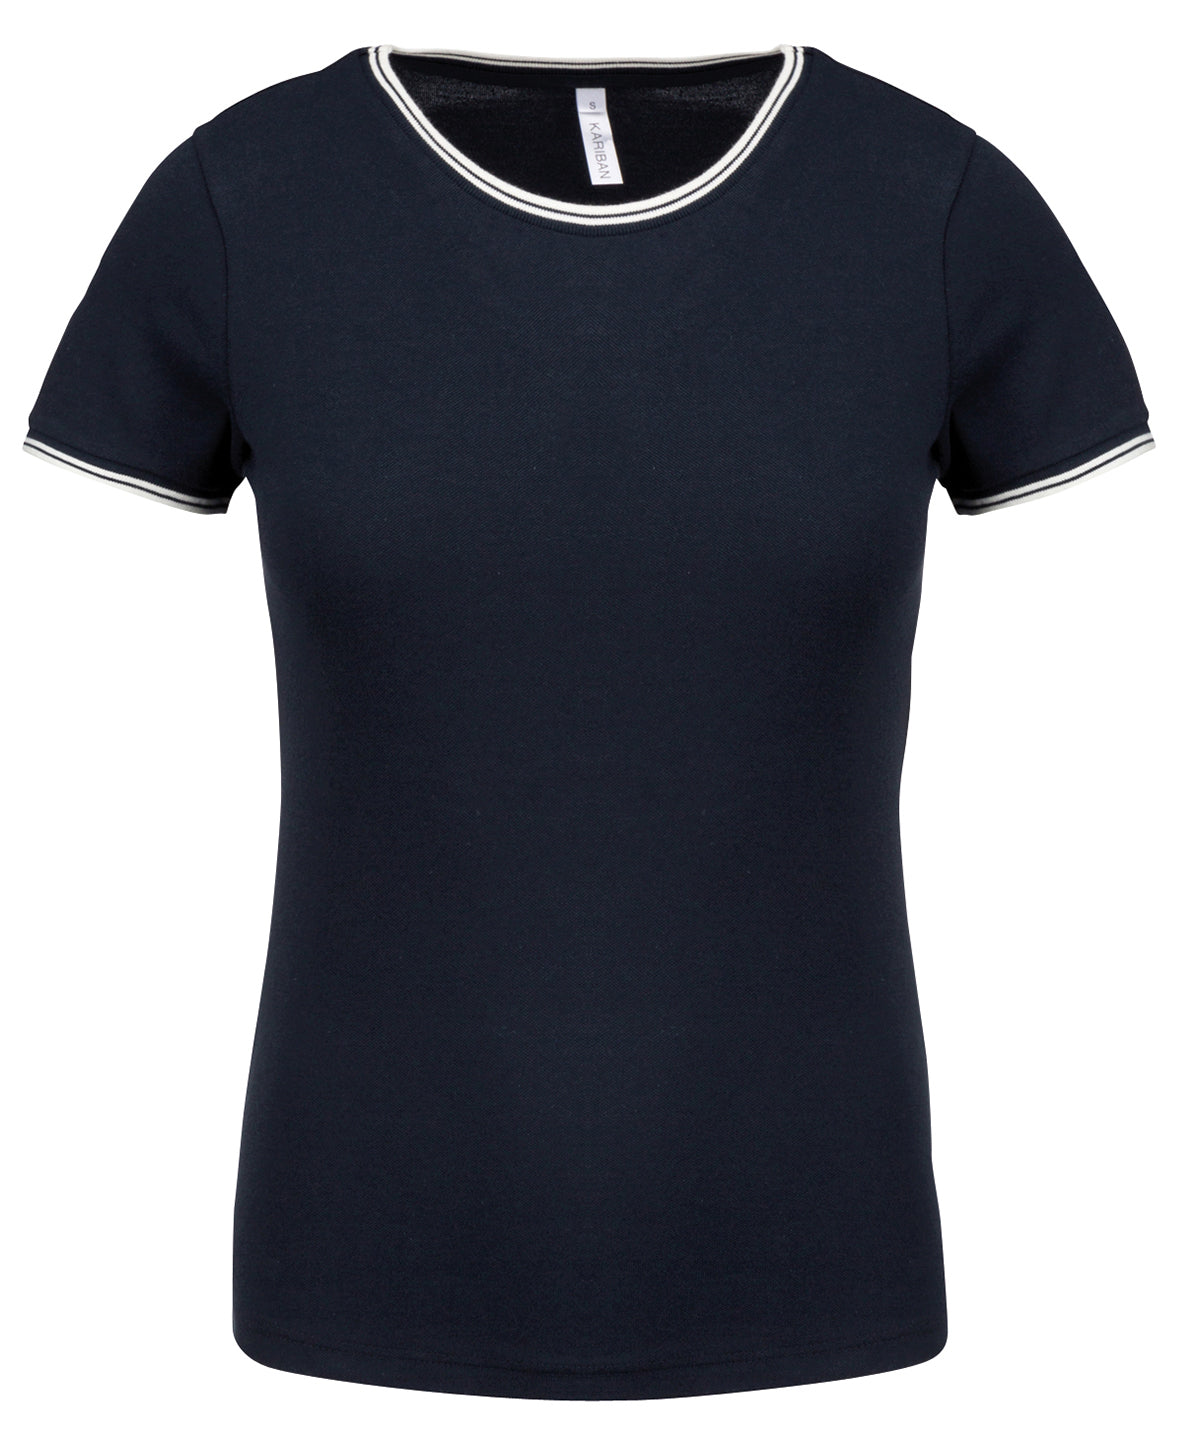 Stuttermabolir - Ladies’ Piqué Knit Crew Neck T-shirt